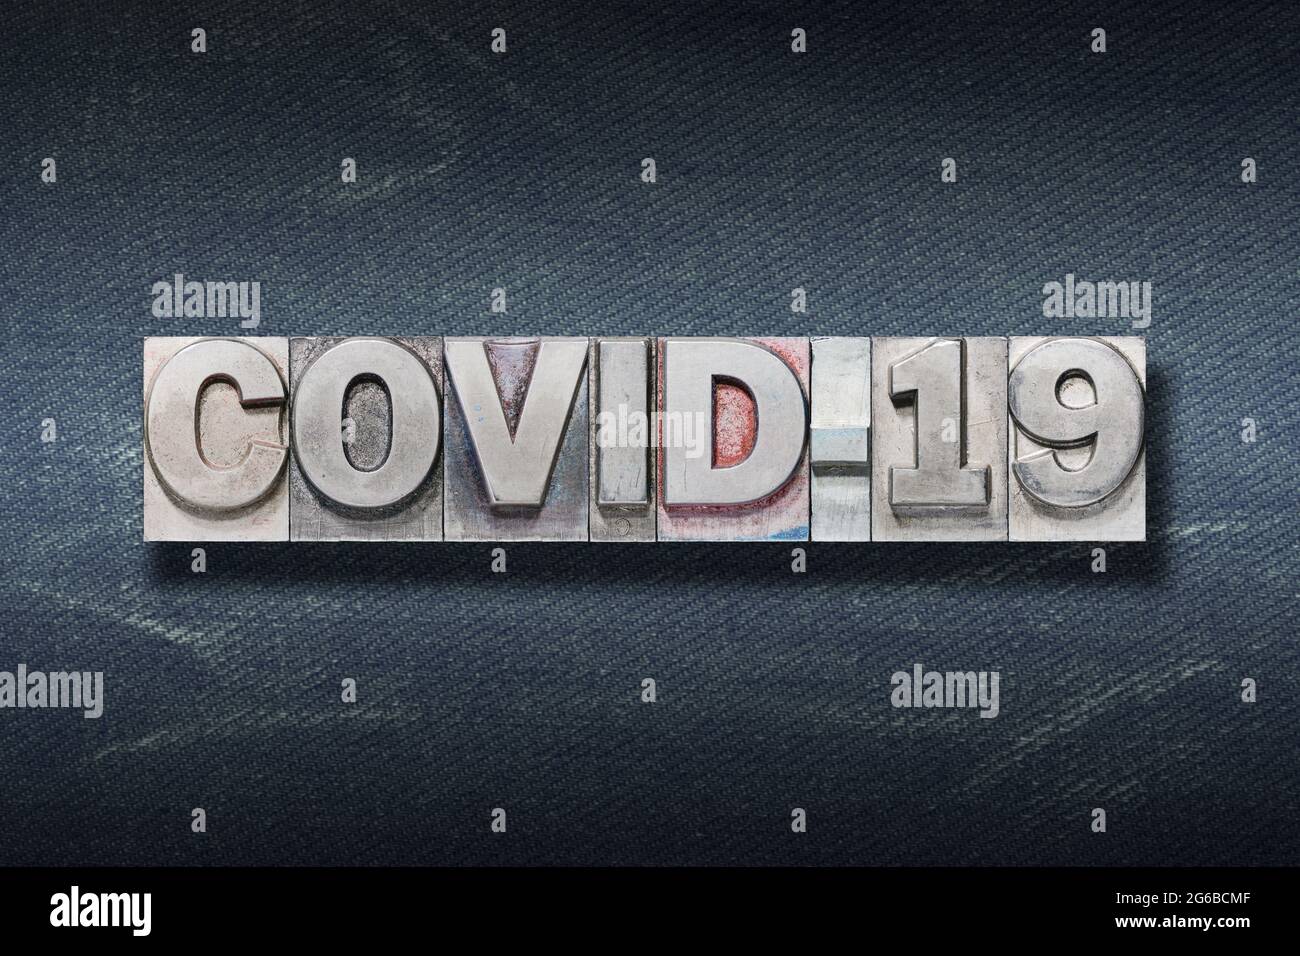 covid-19 coronavirus name abbreviation made from metallic letterpress on dark jeans background Stock Photo